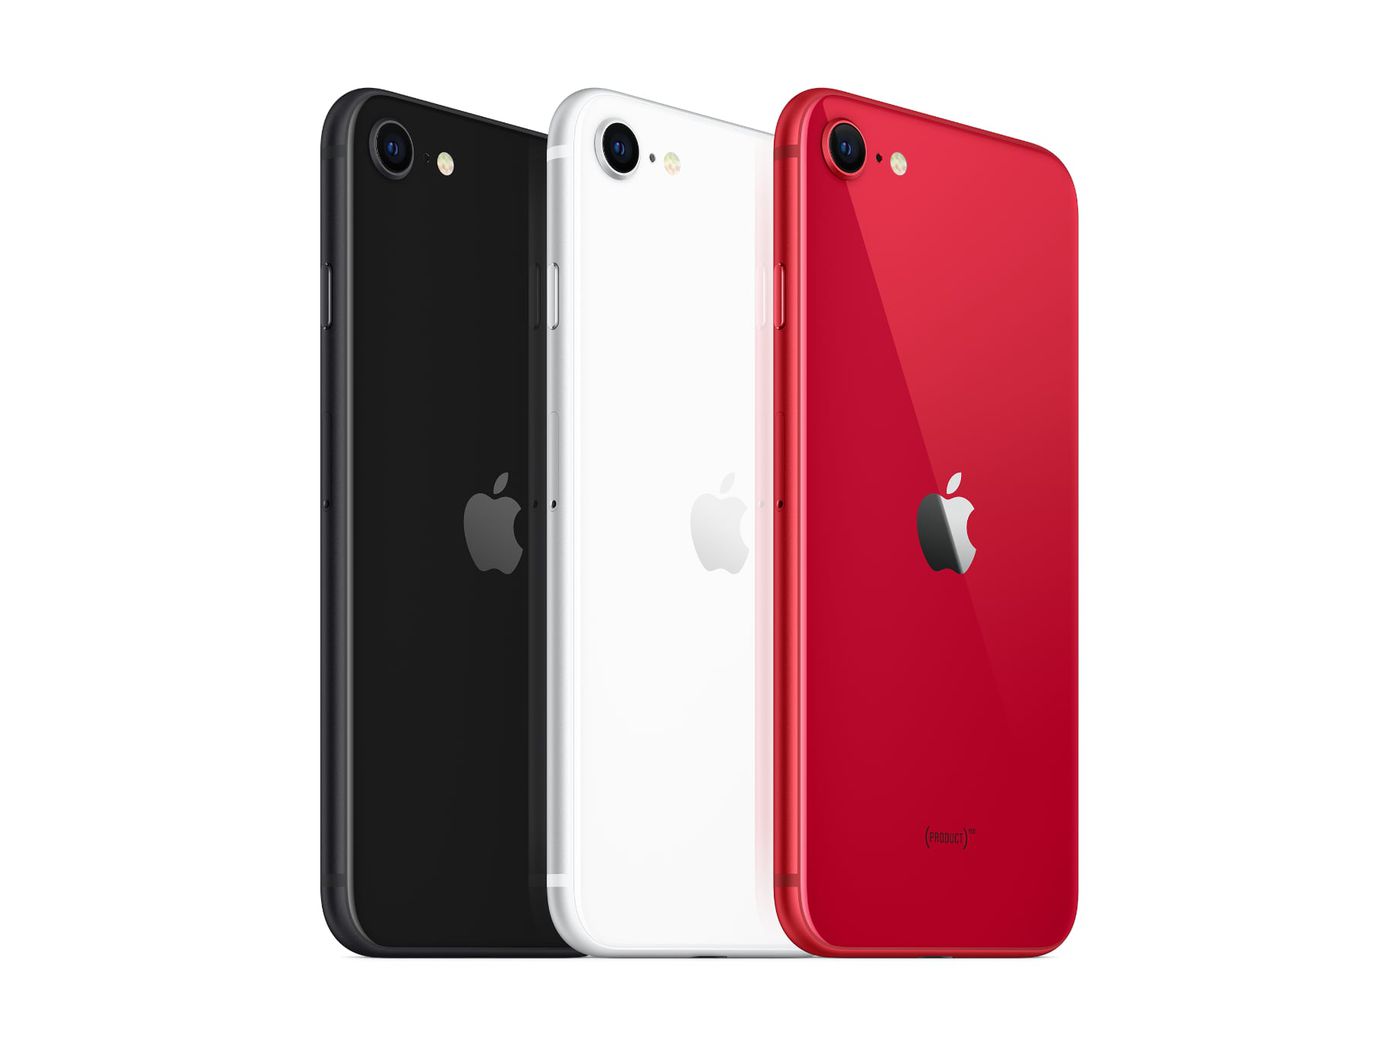 iPhone SE 2020: Apple announces new $399 phone - The Verge